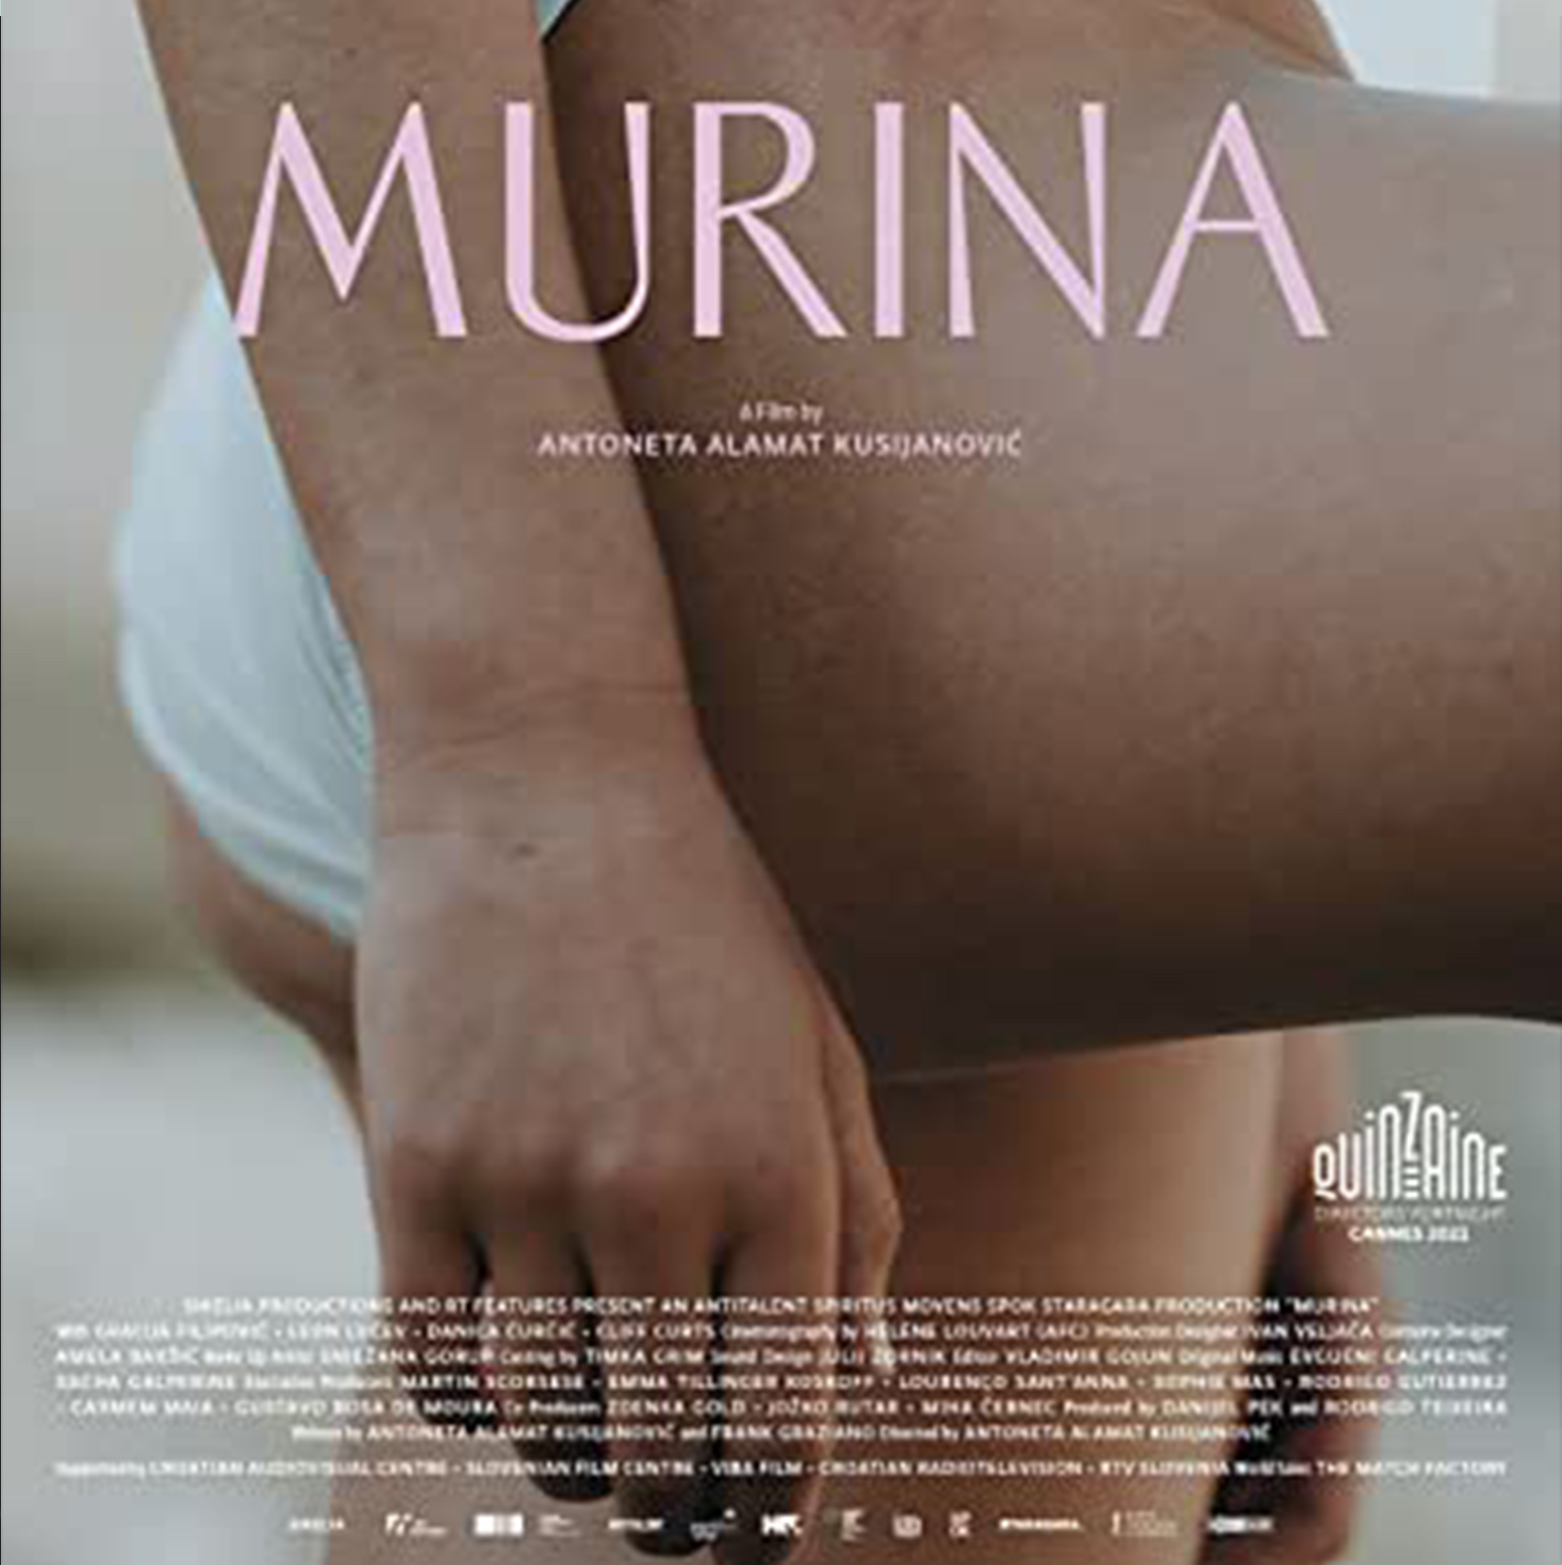 Croatian film “Murina” with Leon Lučev, received the prestigious Camera d’Or prize